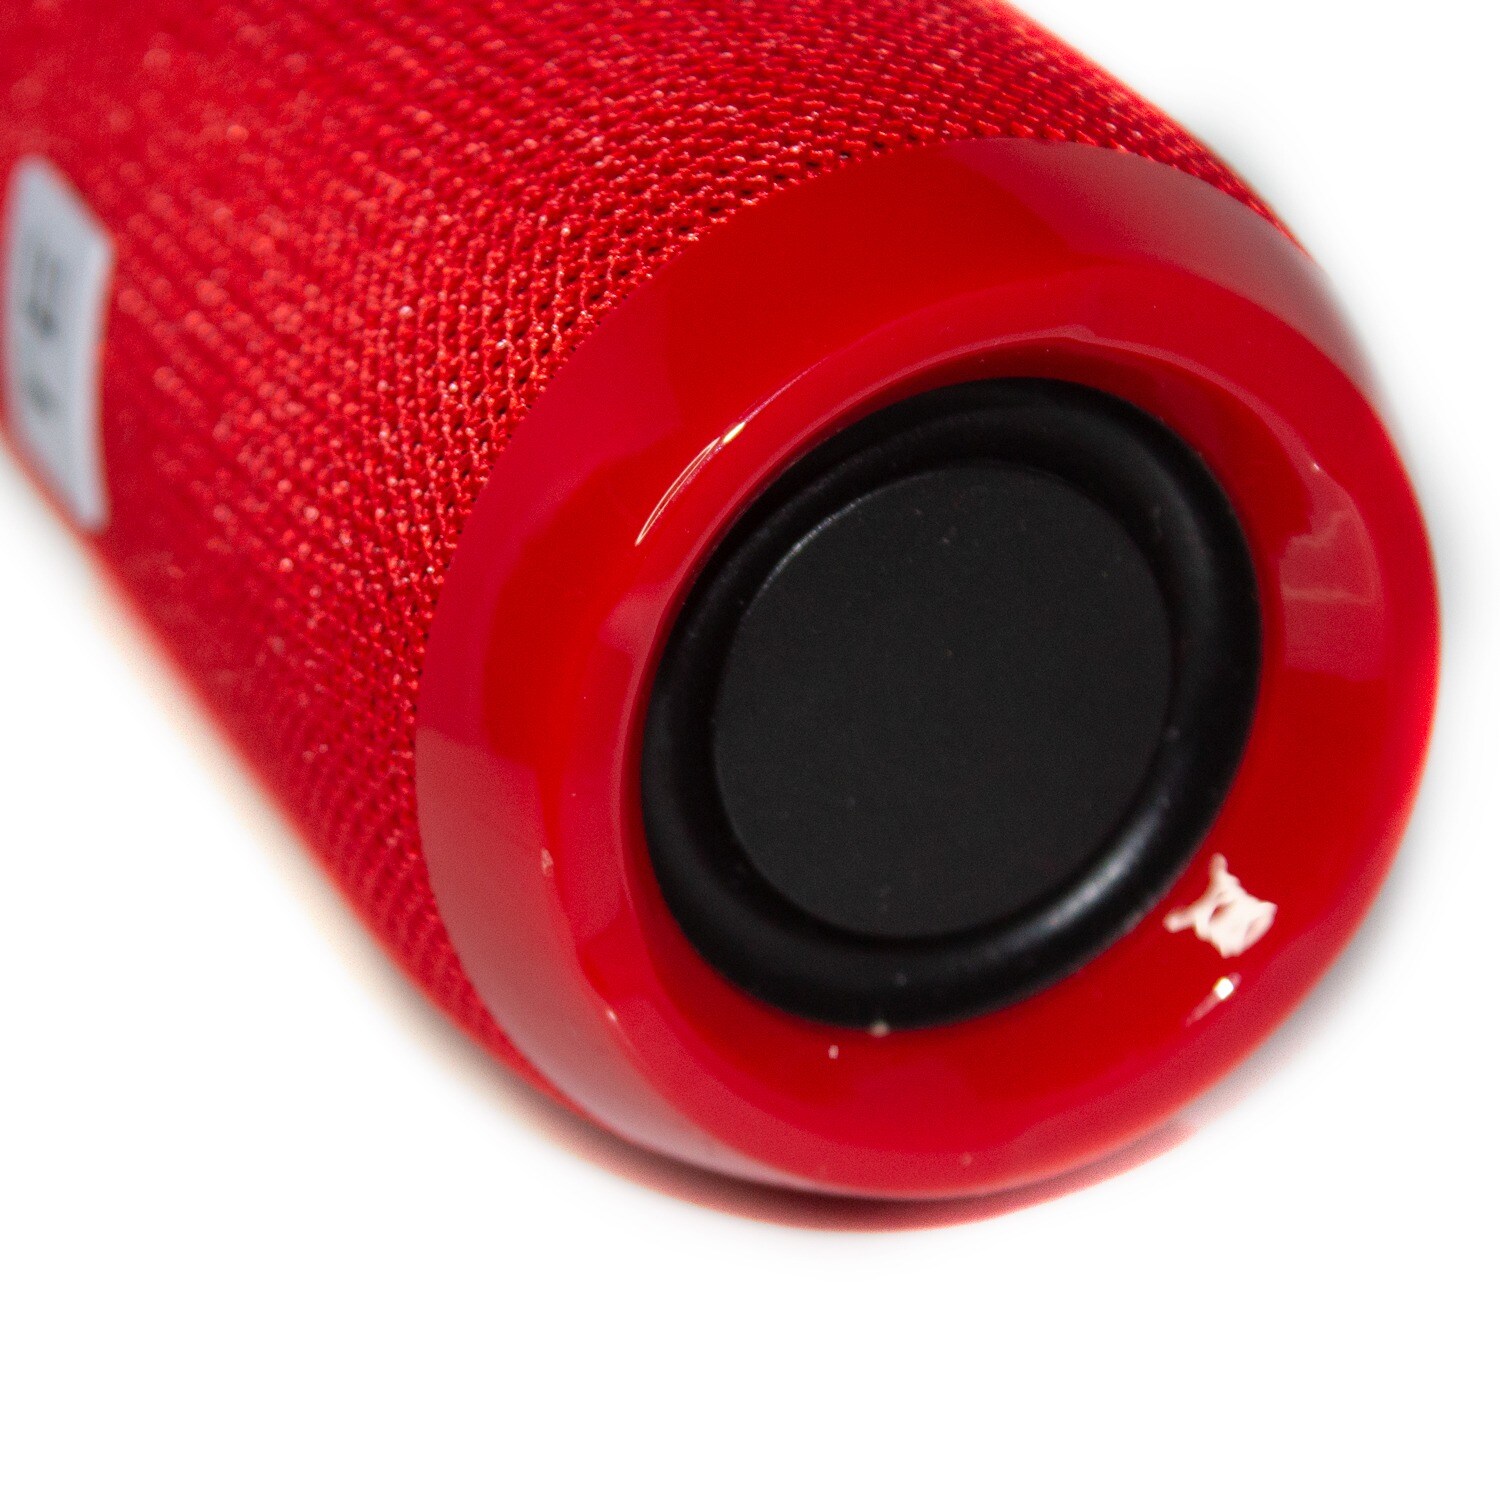 TE-V2 Bluetooth Speaker Portable Brand New Red Red - 3